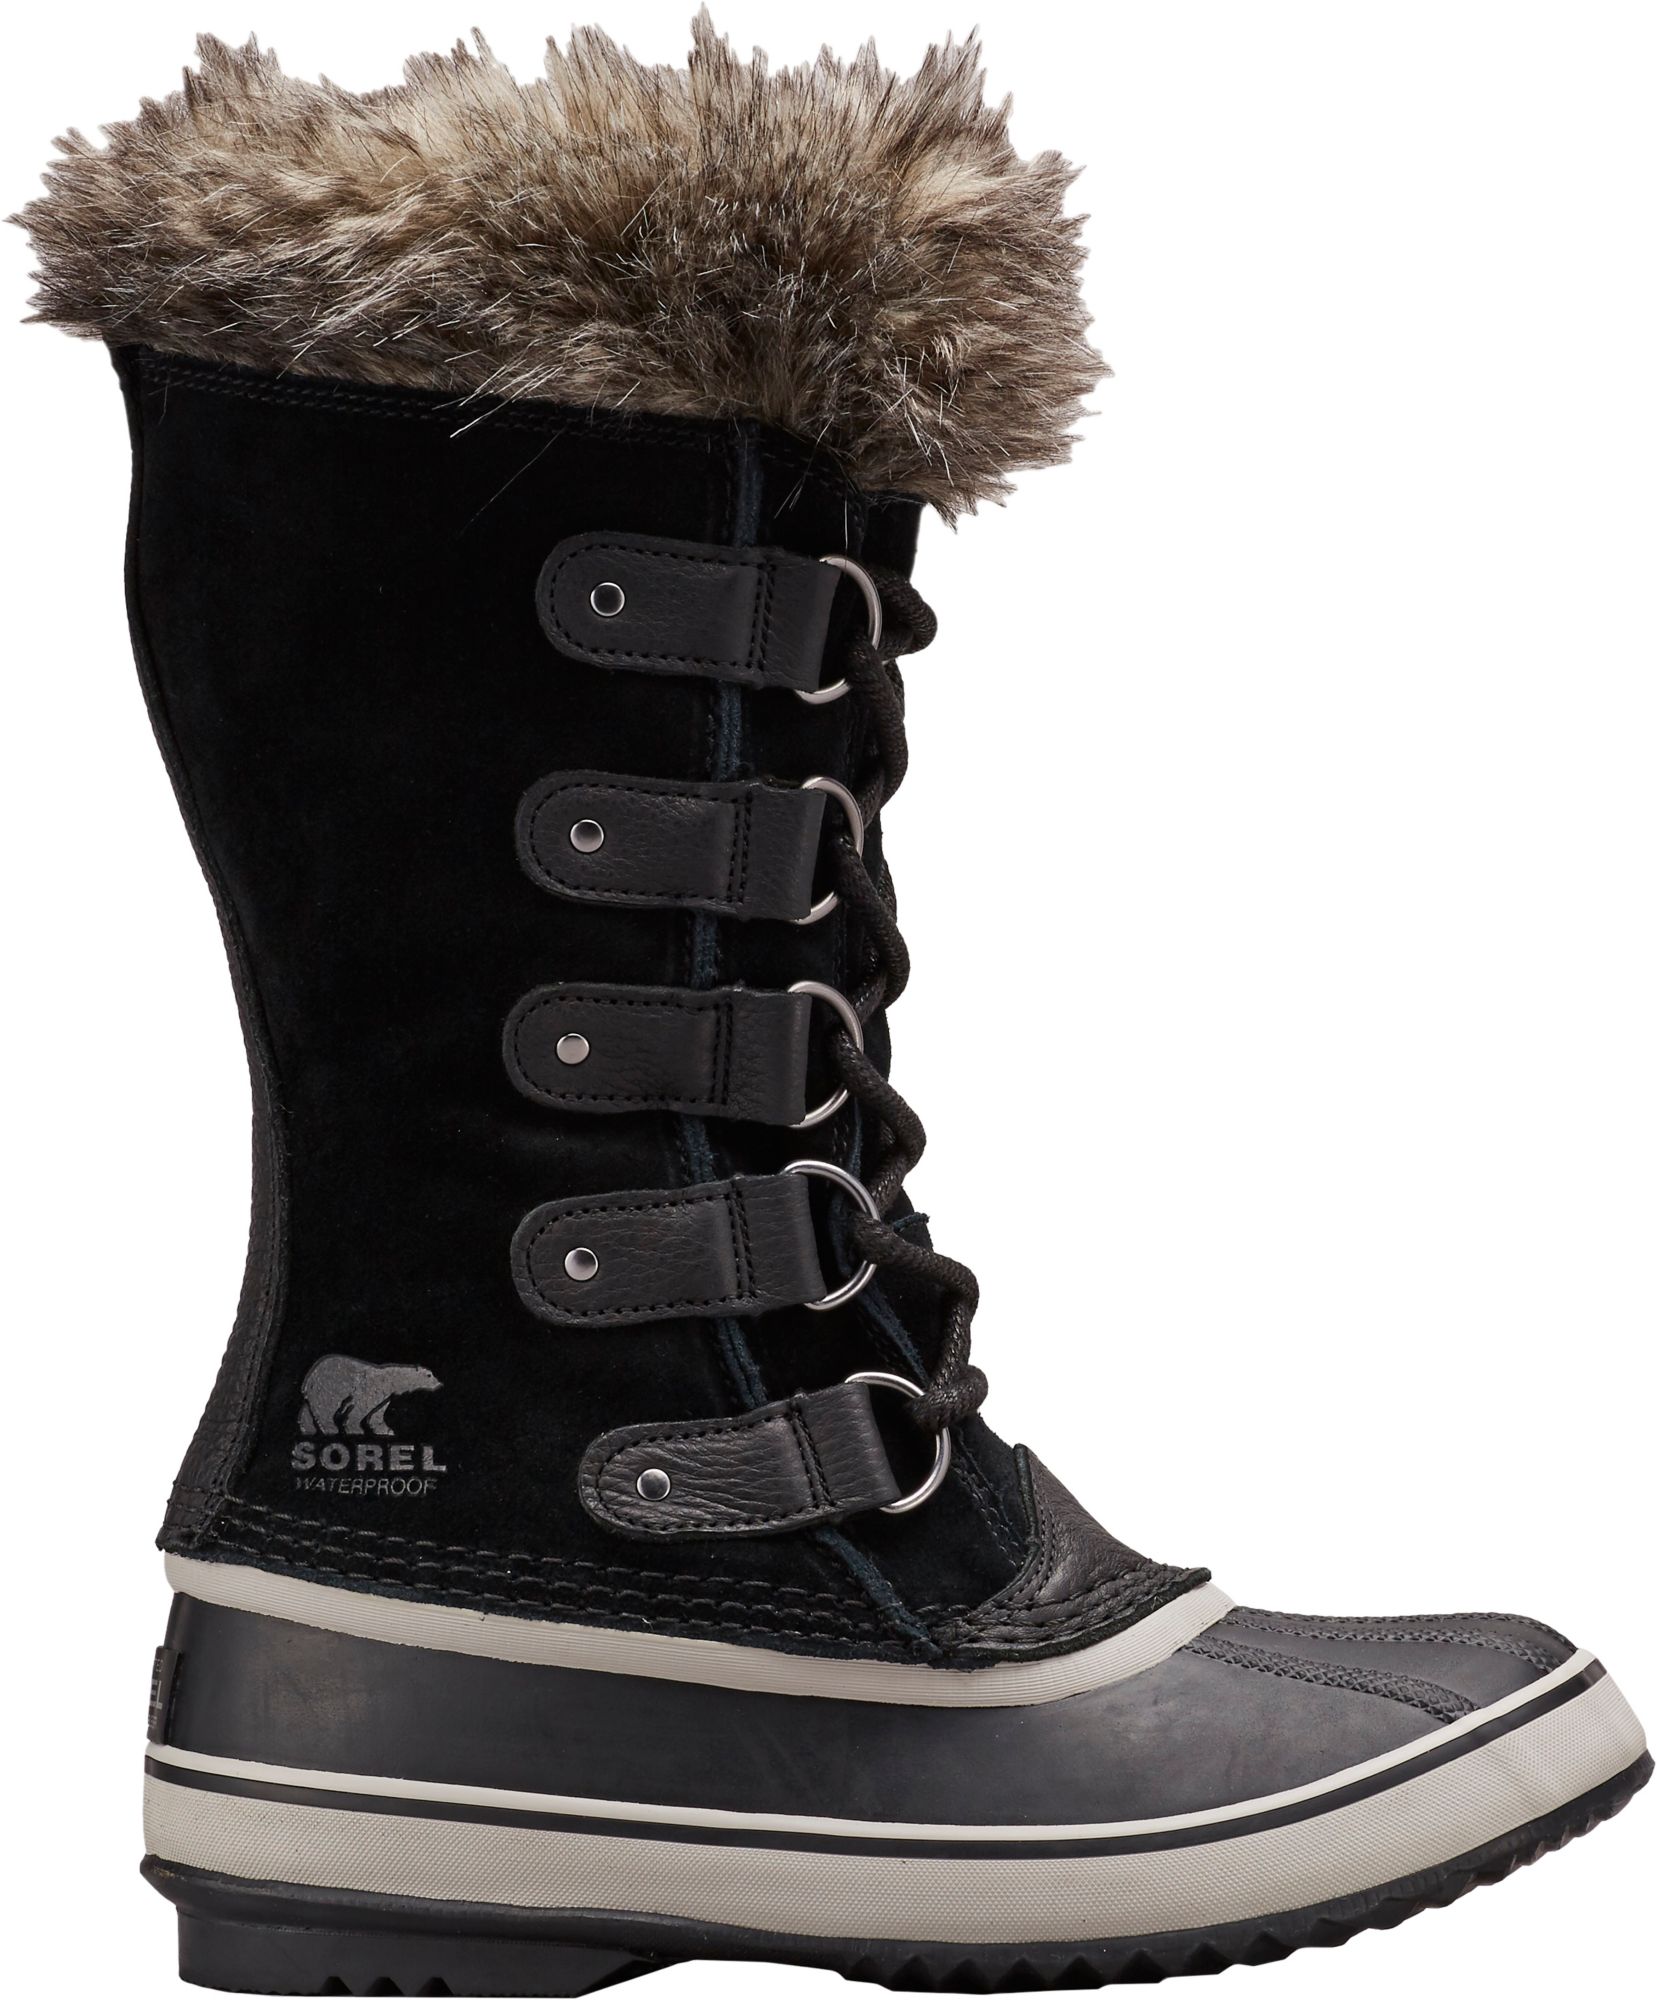 sorel snow boots black friday